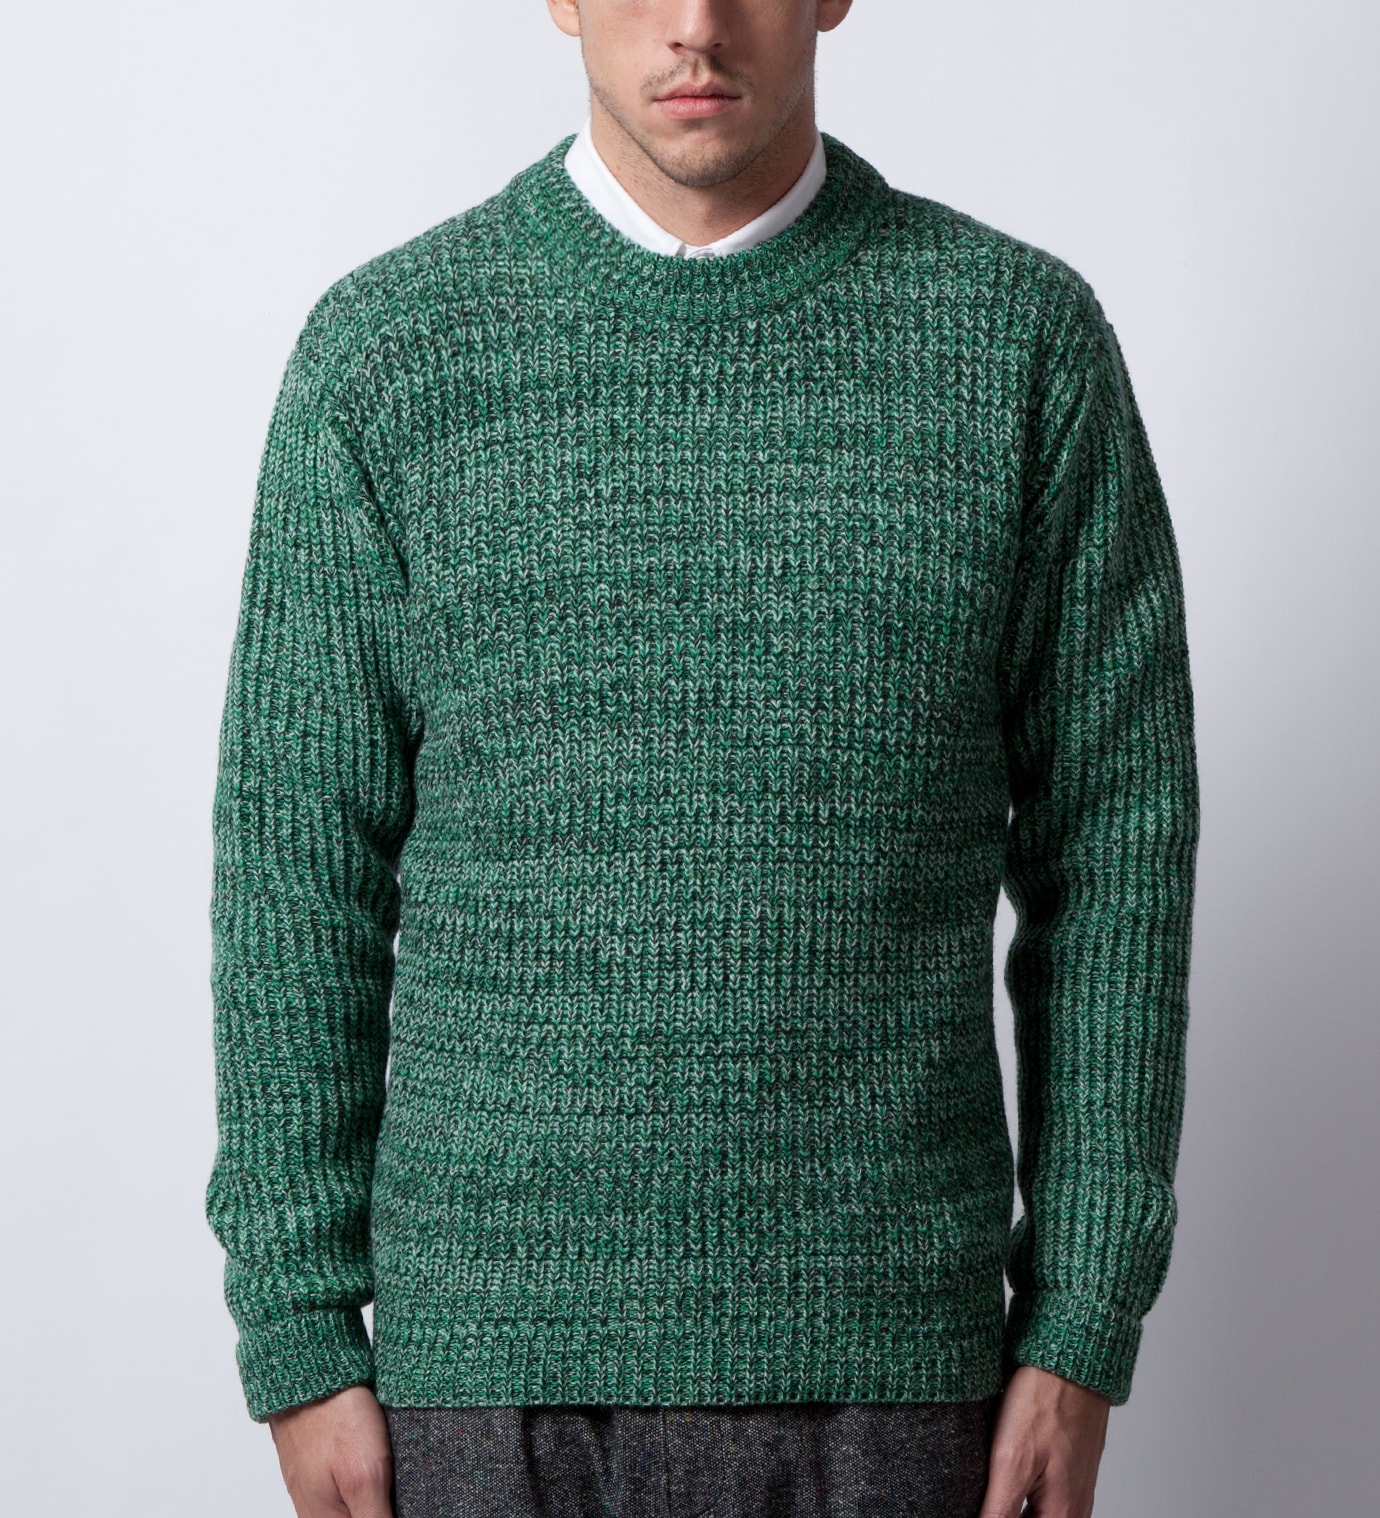 Études - Echo Green Sweater | HBX